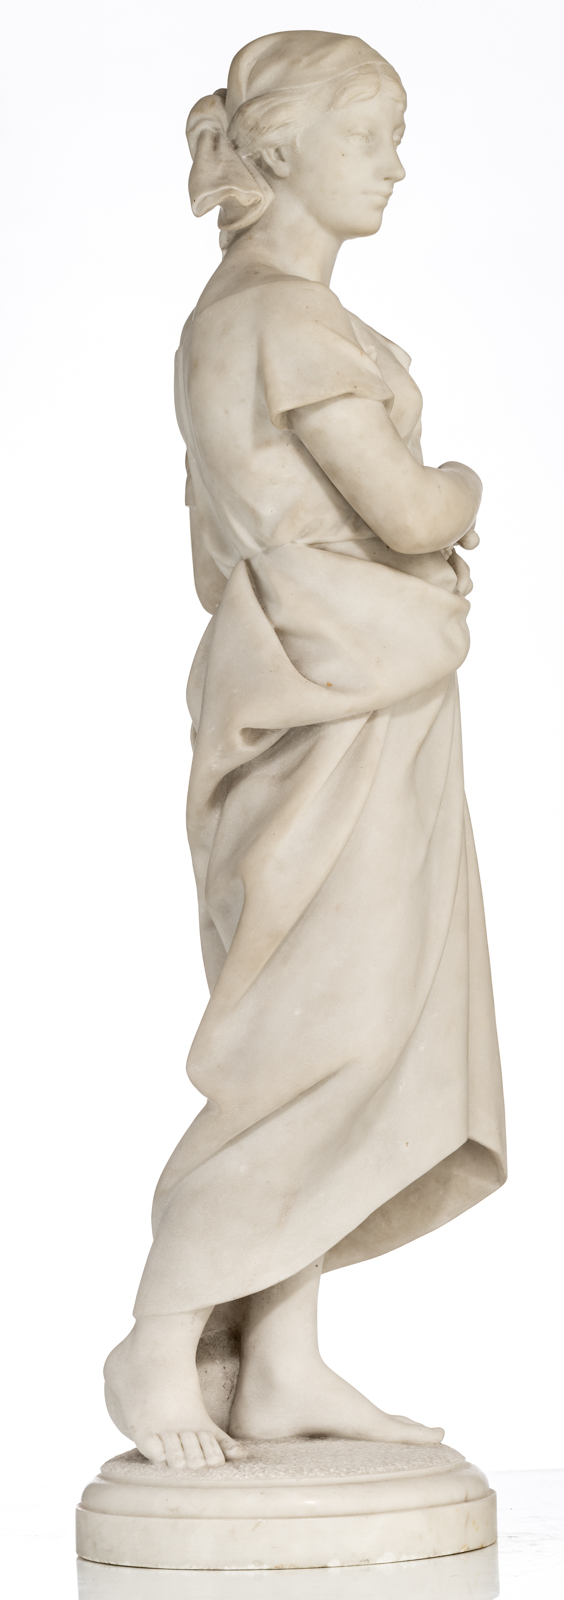 Madrassi L., the harvest, Carrara marble, H 96 cm - Image 4 of 6